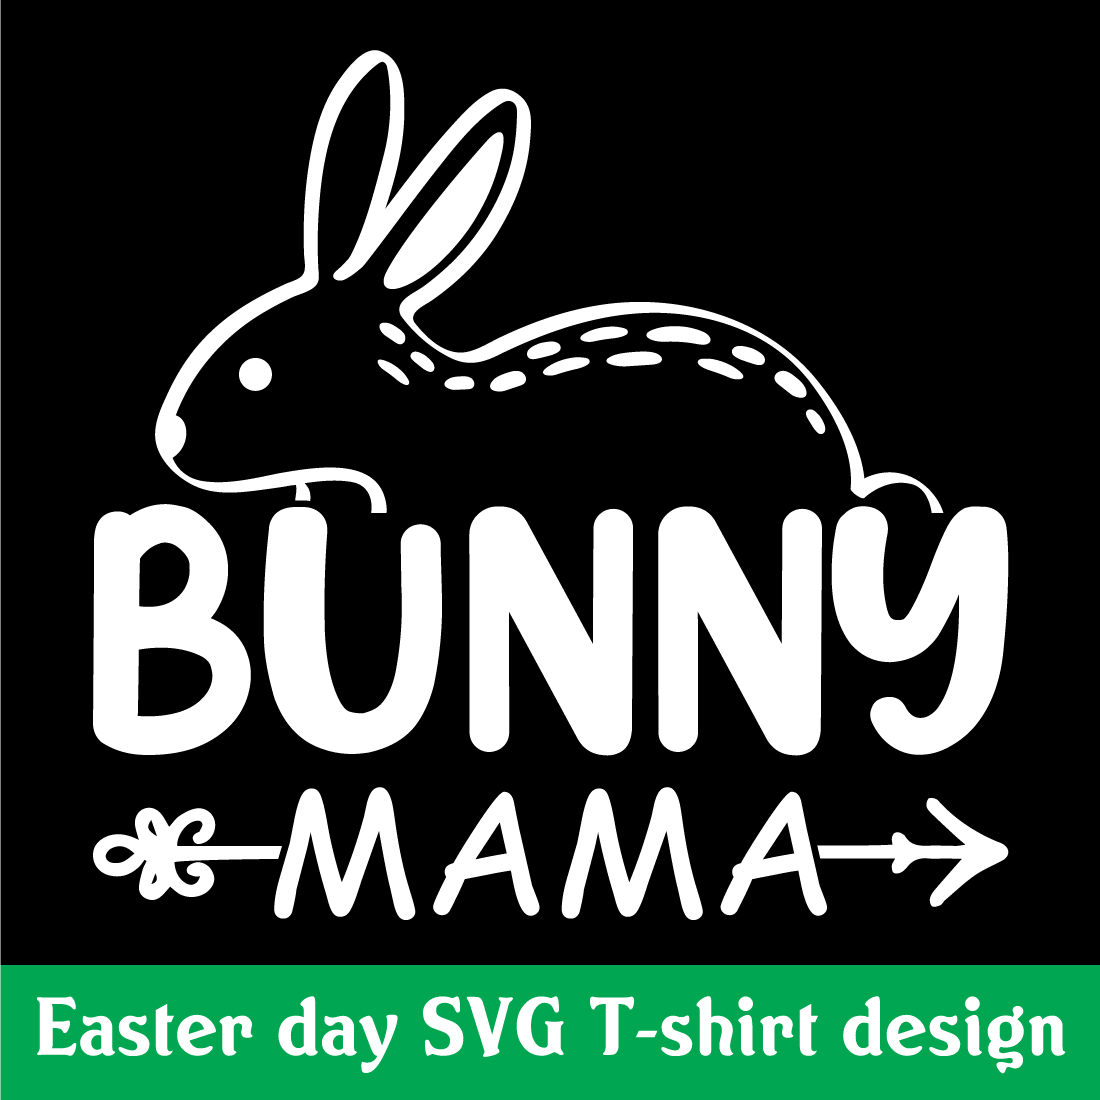 Bunny mama Easter Day printable T-Shirt preview image.